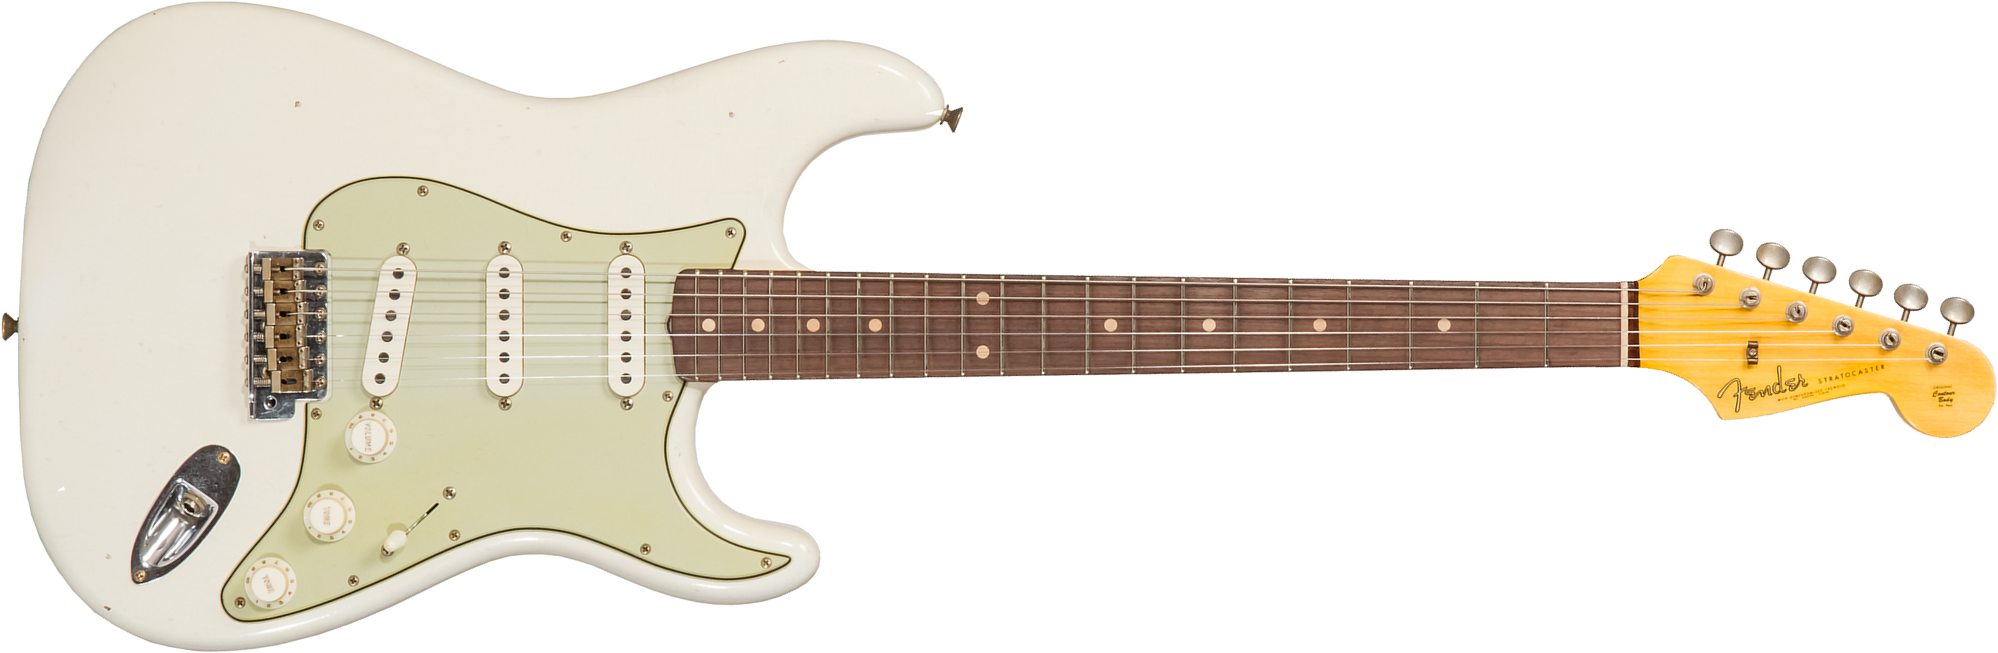 Fender Custom Shop Strat 1962/63 3s Trem Rw #cz565163 - Journeyman Relic Olympic White - E-Gitarre in Str-Form - Main picture